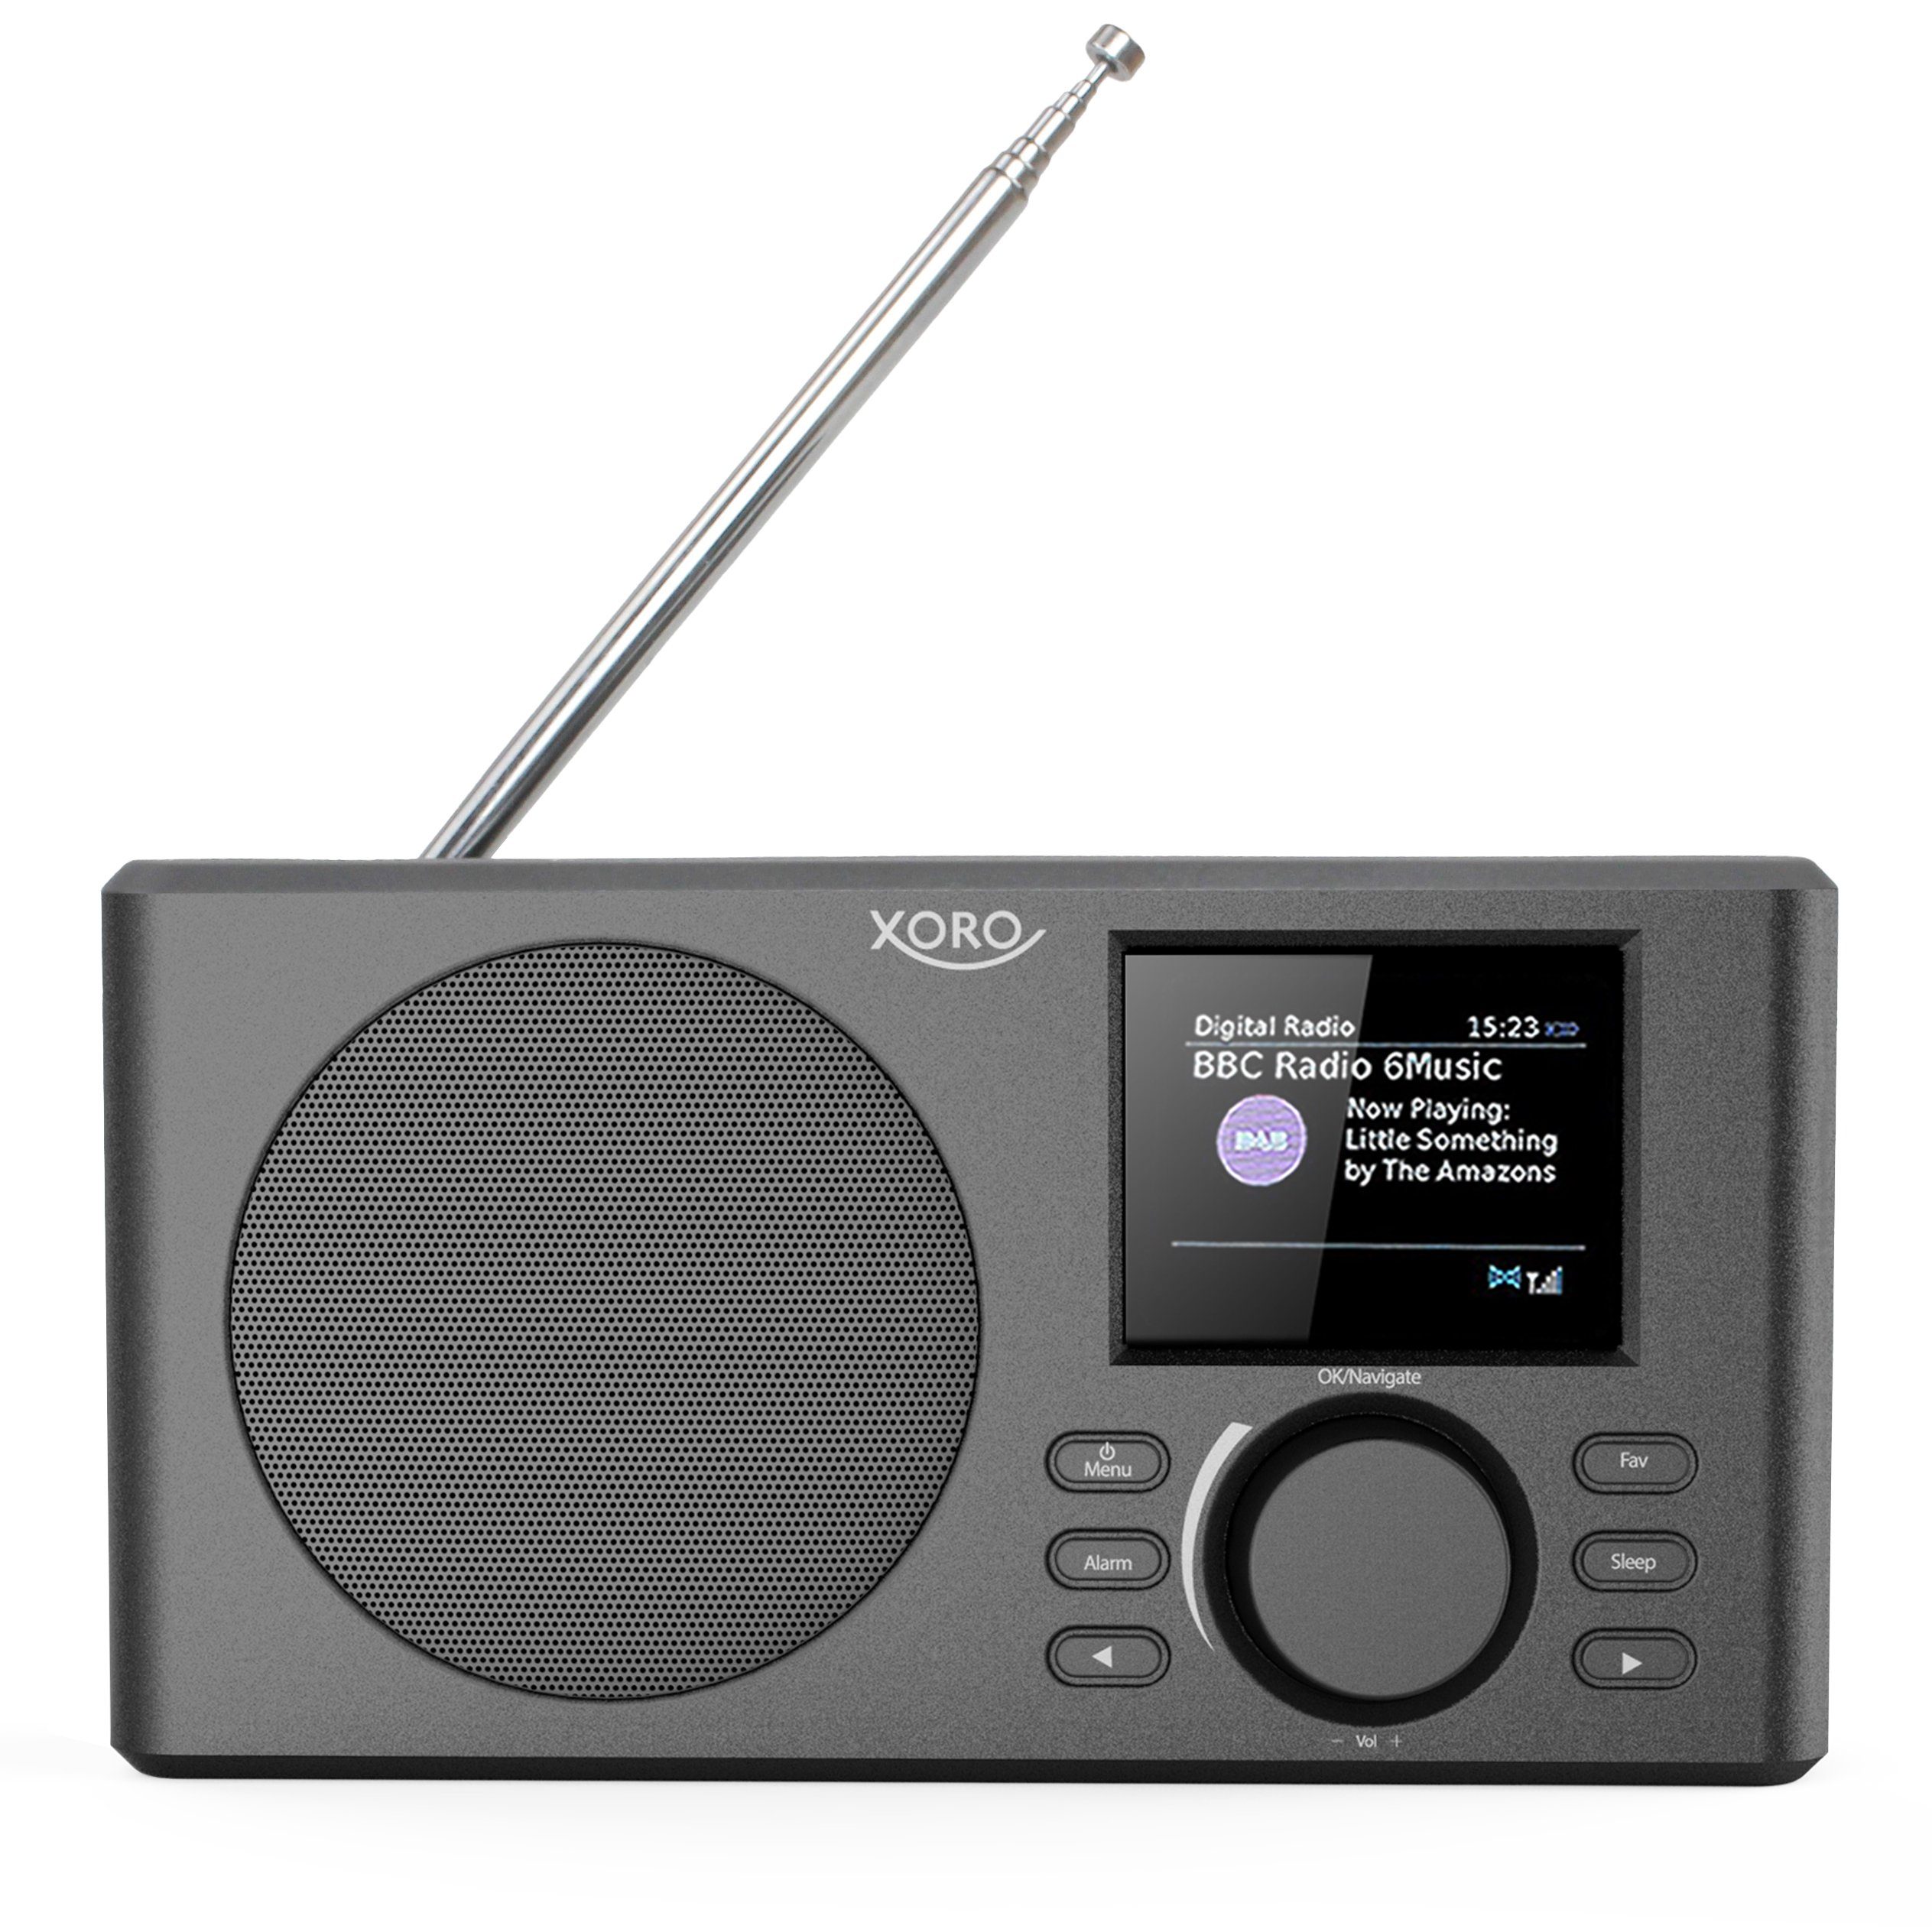 IR Connect Spotify Akku 2200 Internet-Radio 150 Internetradio Xoro und mit XORO DAB mAh